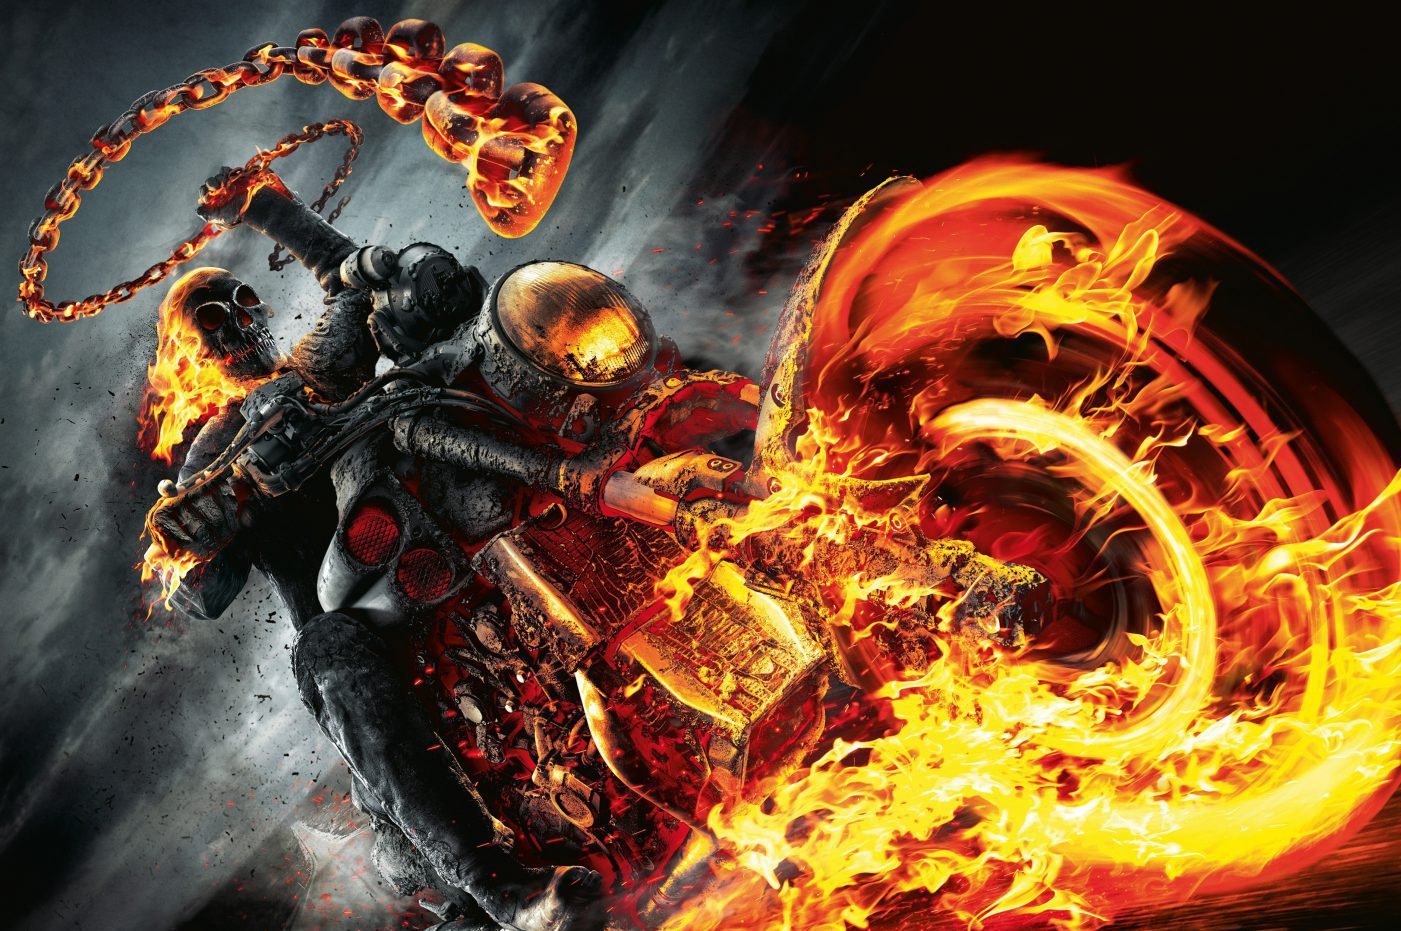 Ghost Rider sur Prime Video : retour sur la saga avec Nicolas Cage